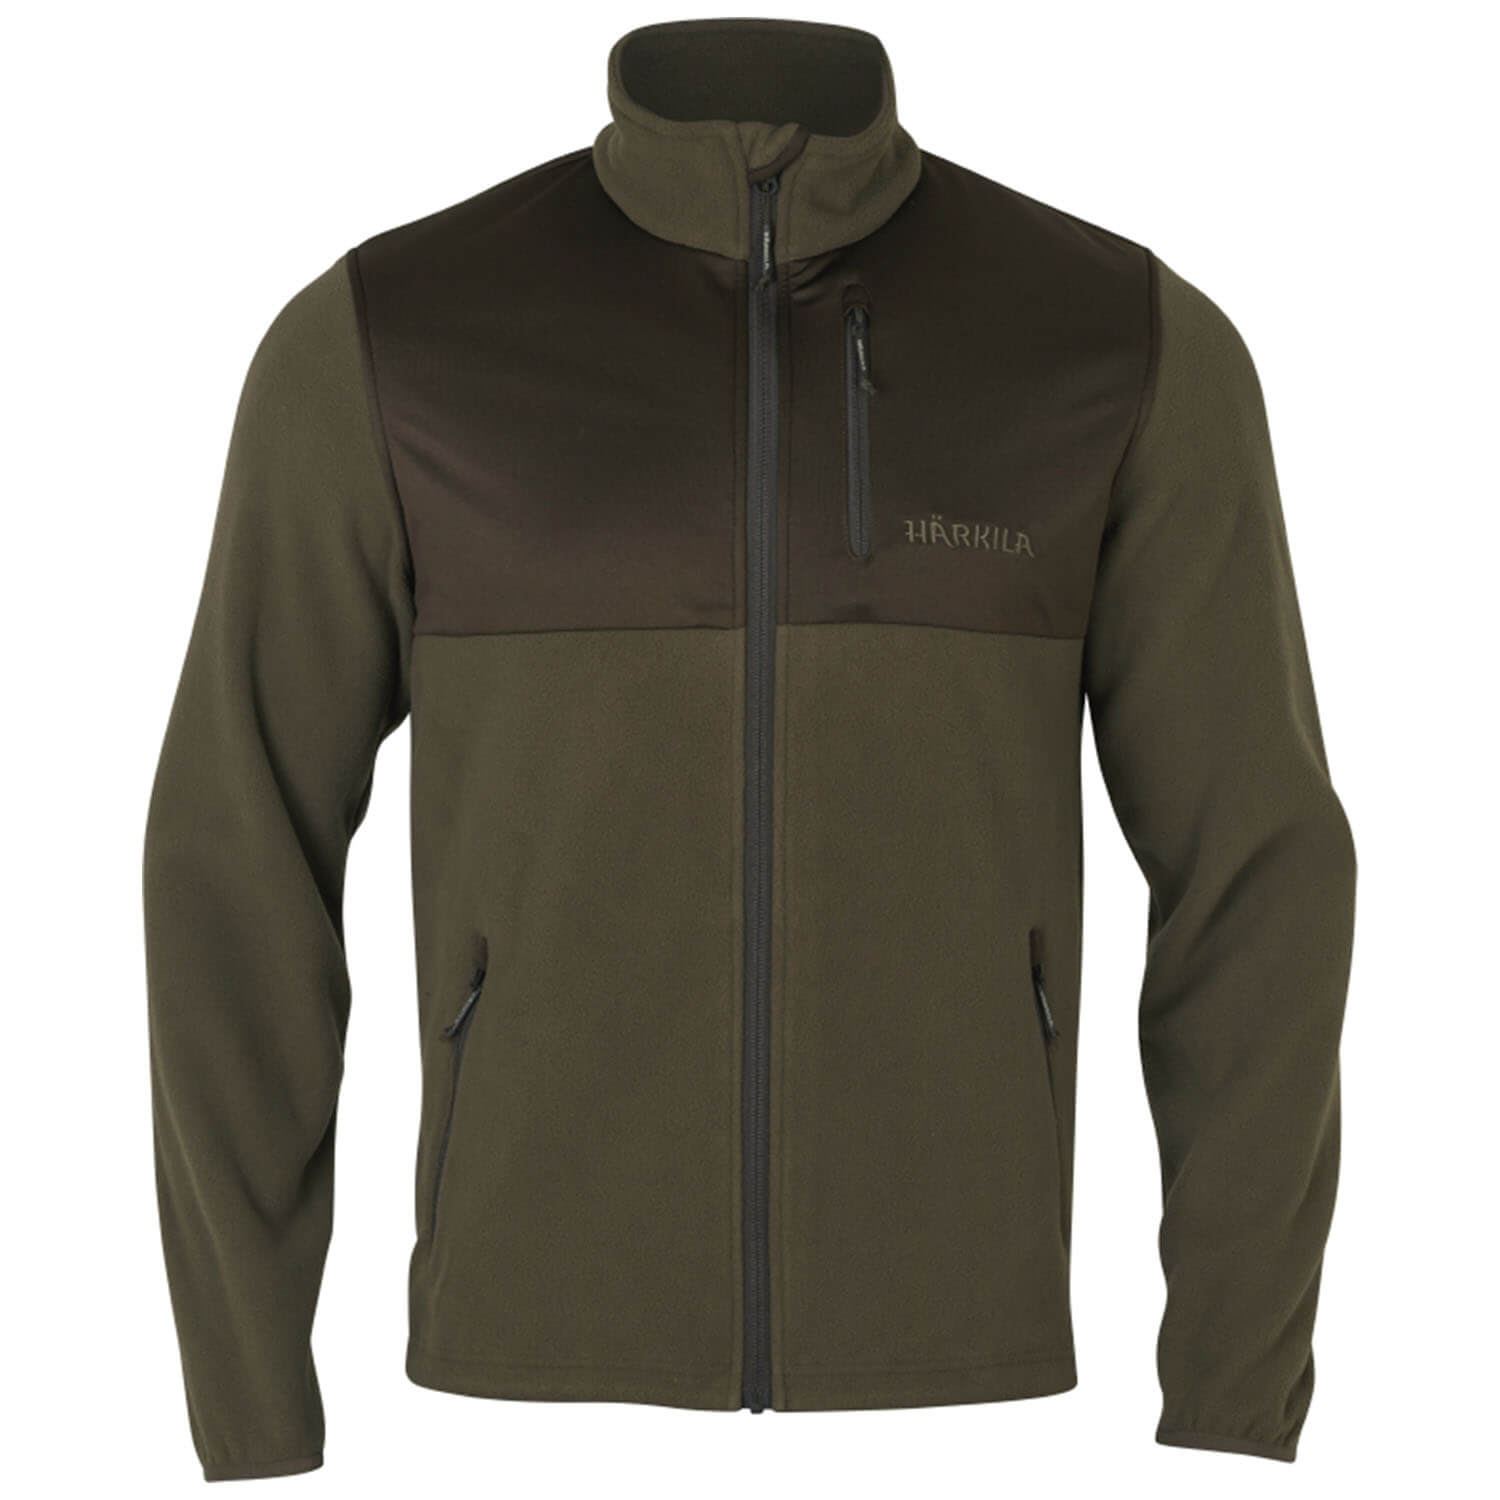 Härkila fleece jacket Steinn (light willow green)